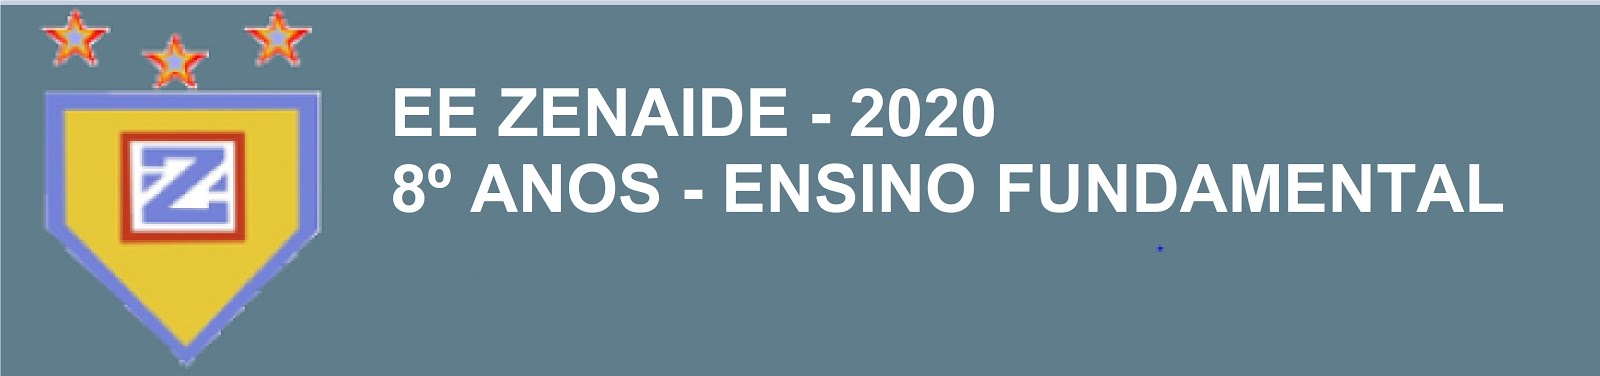 EE ZENAIDE - 2020 - 8º ANOS - ENSINO FUNDAMENTAL